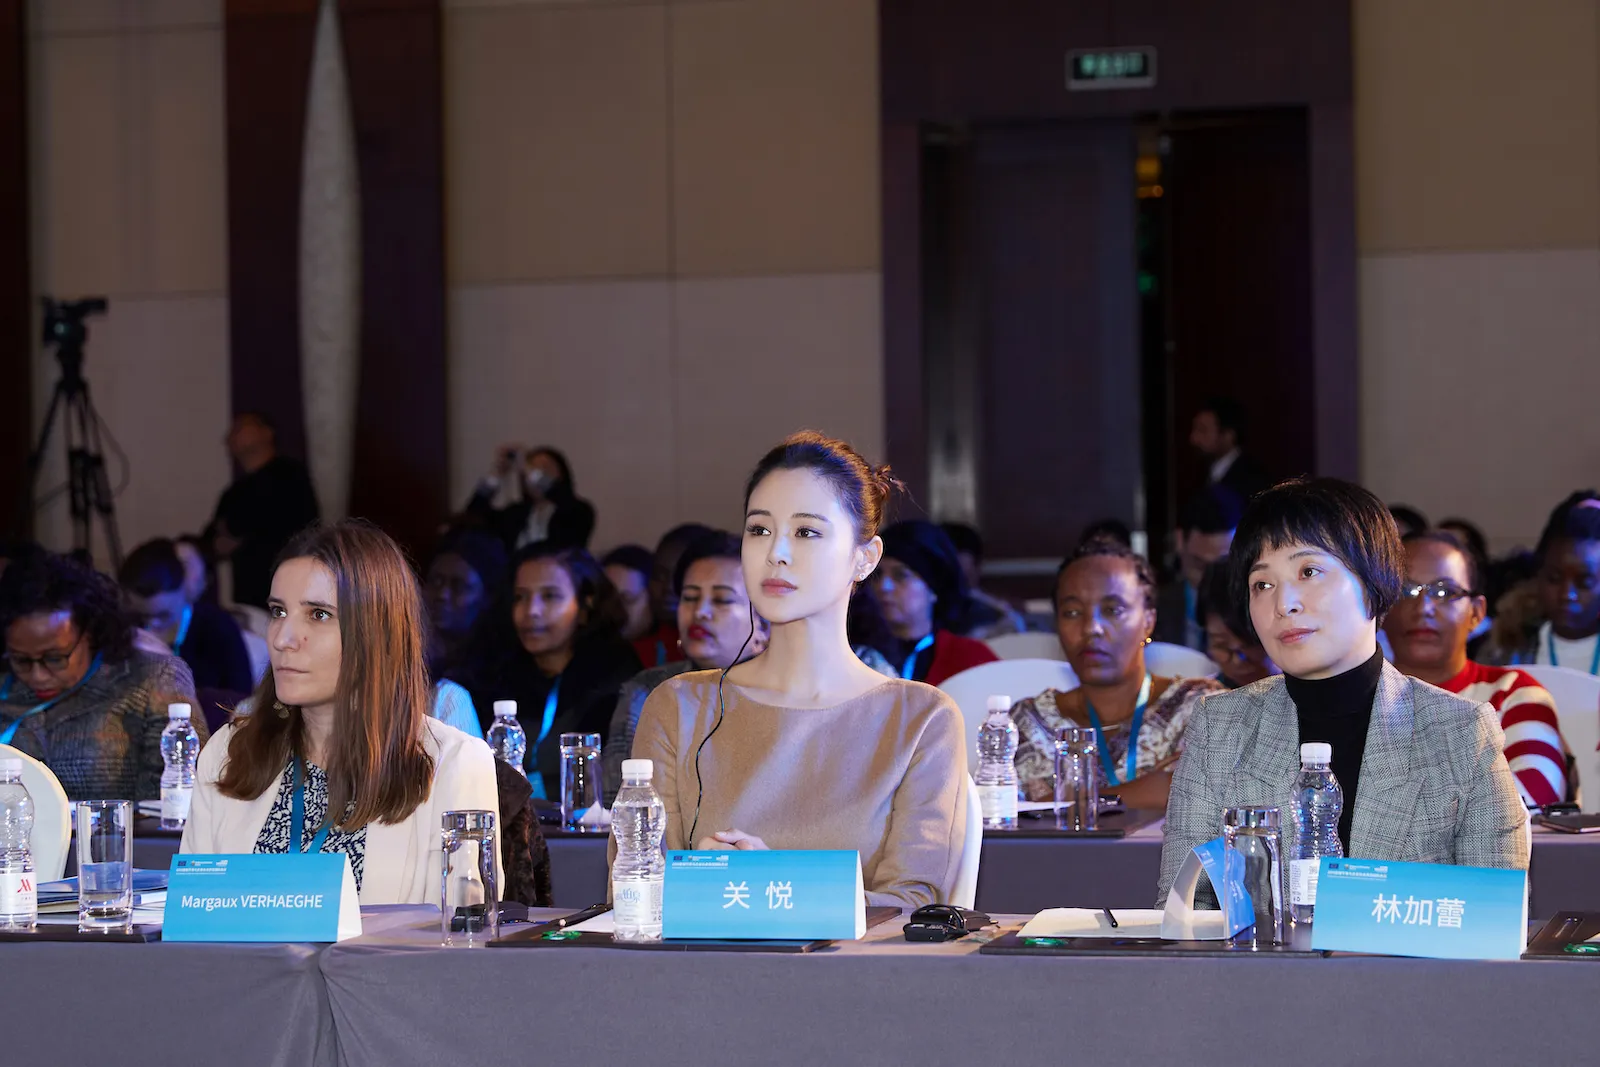  Yue Guan 倡导企业为女性赋权.JPG